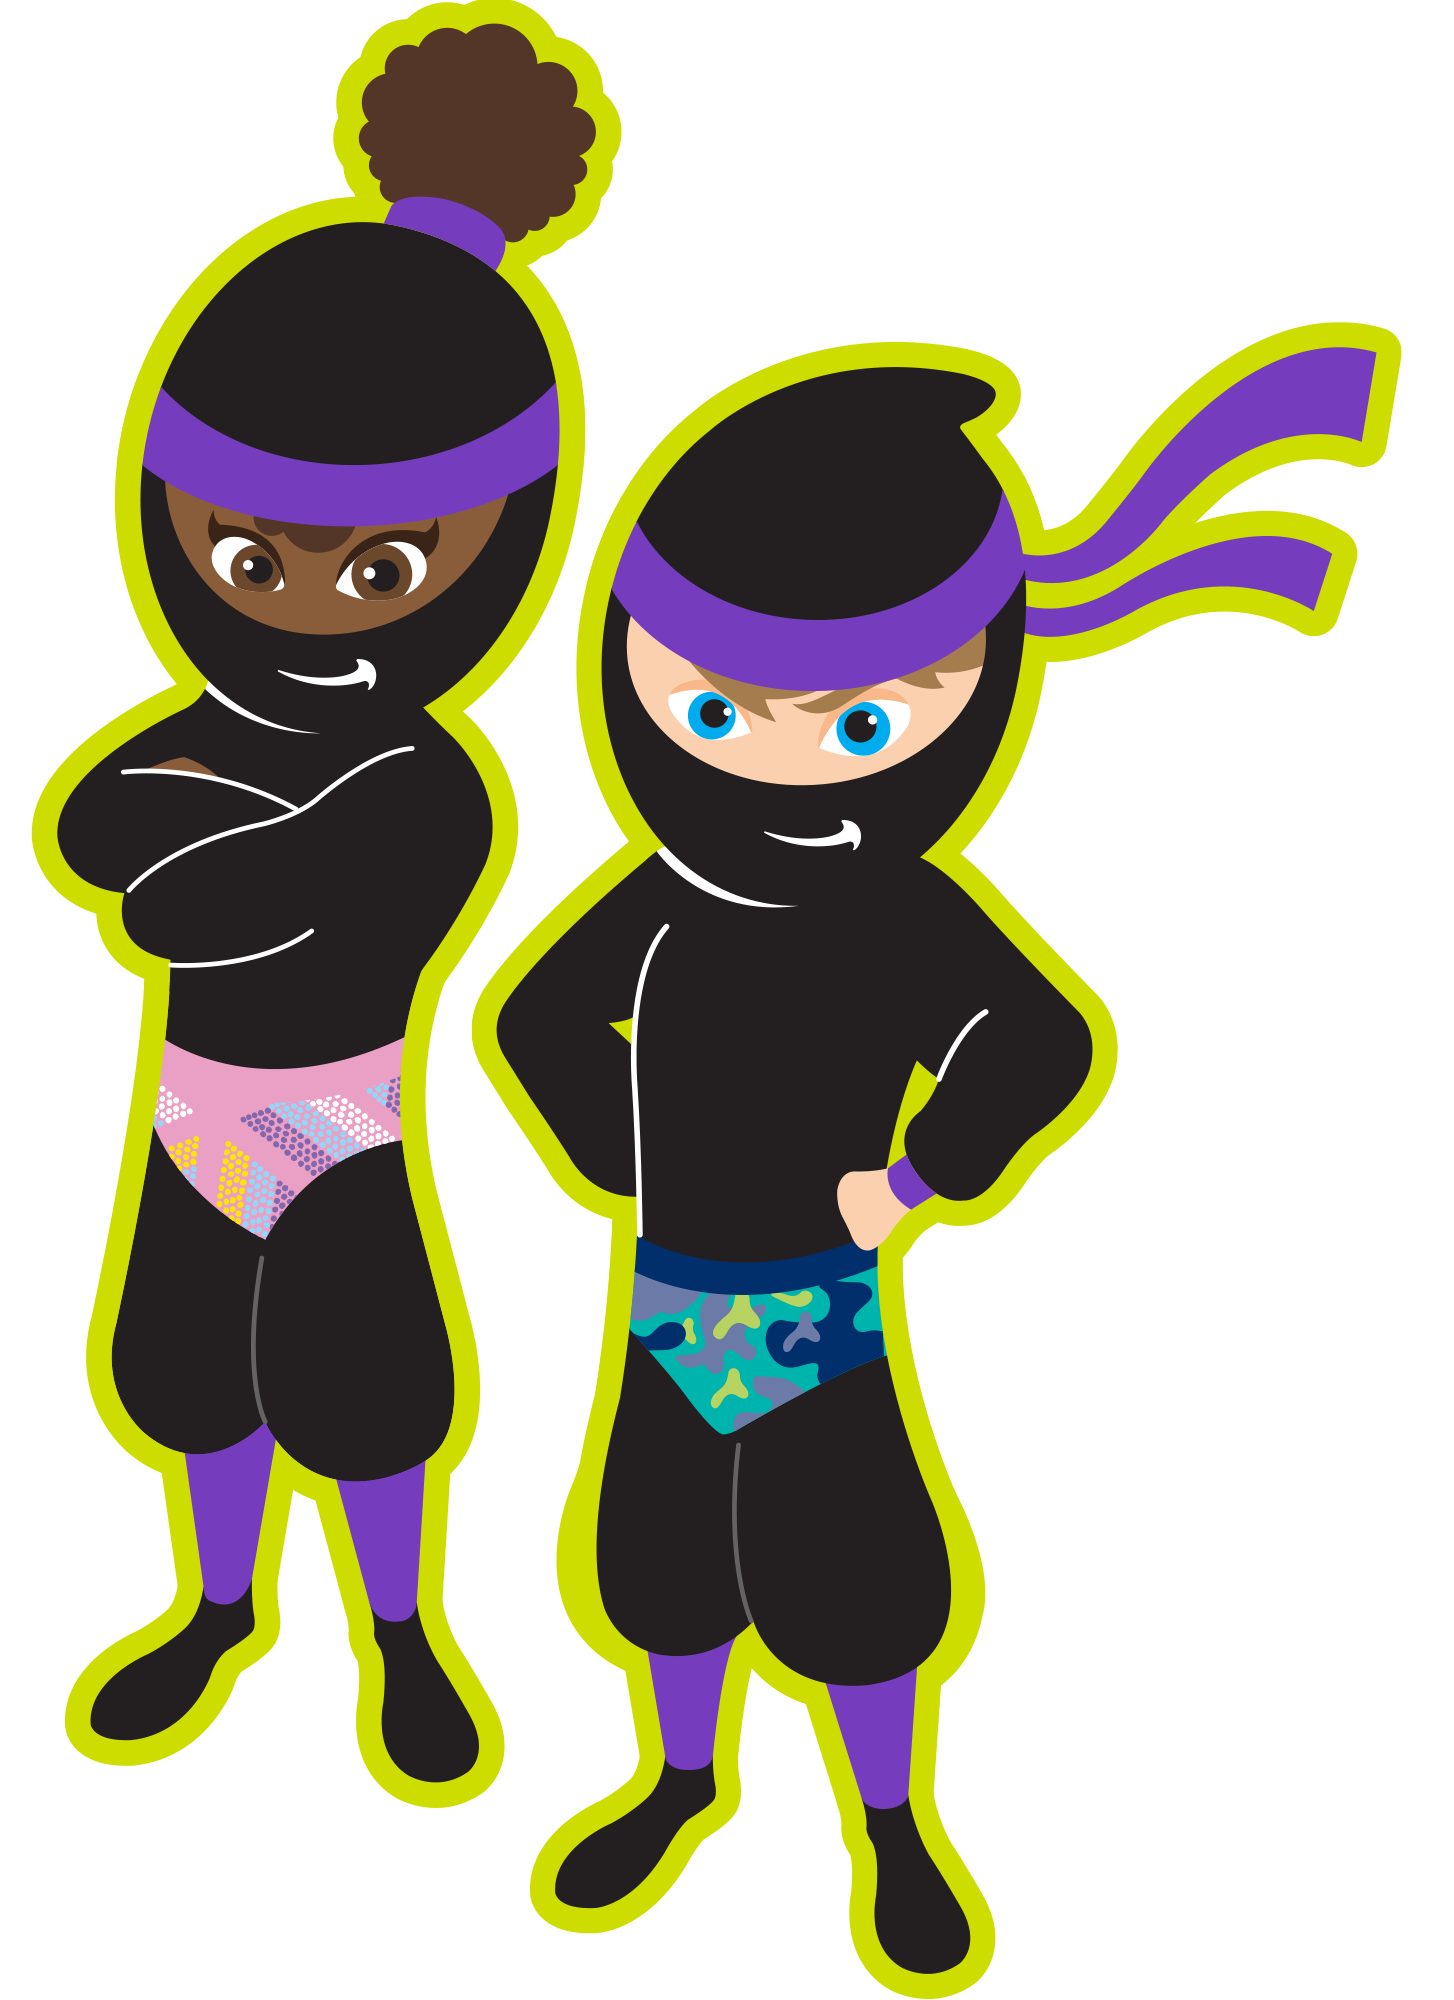 Ninjamas  Absorbent Nighttime Bedwetting Underwear